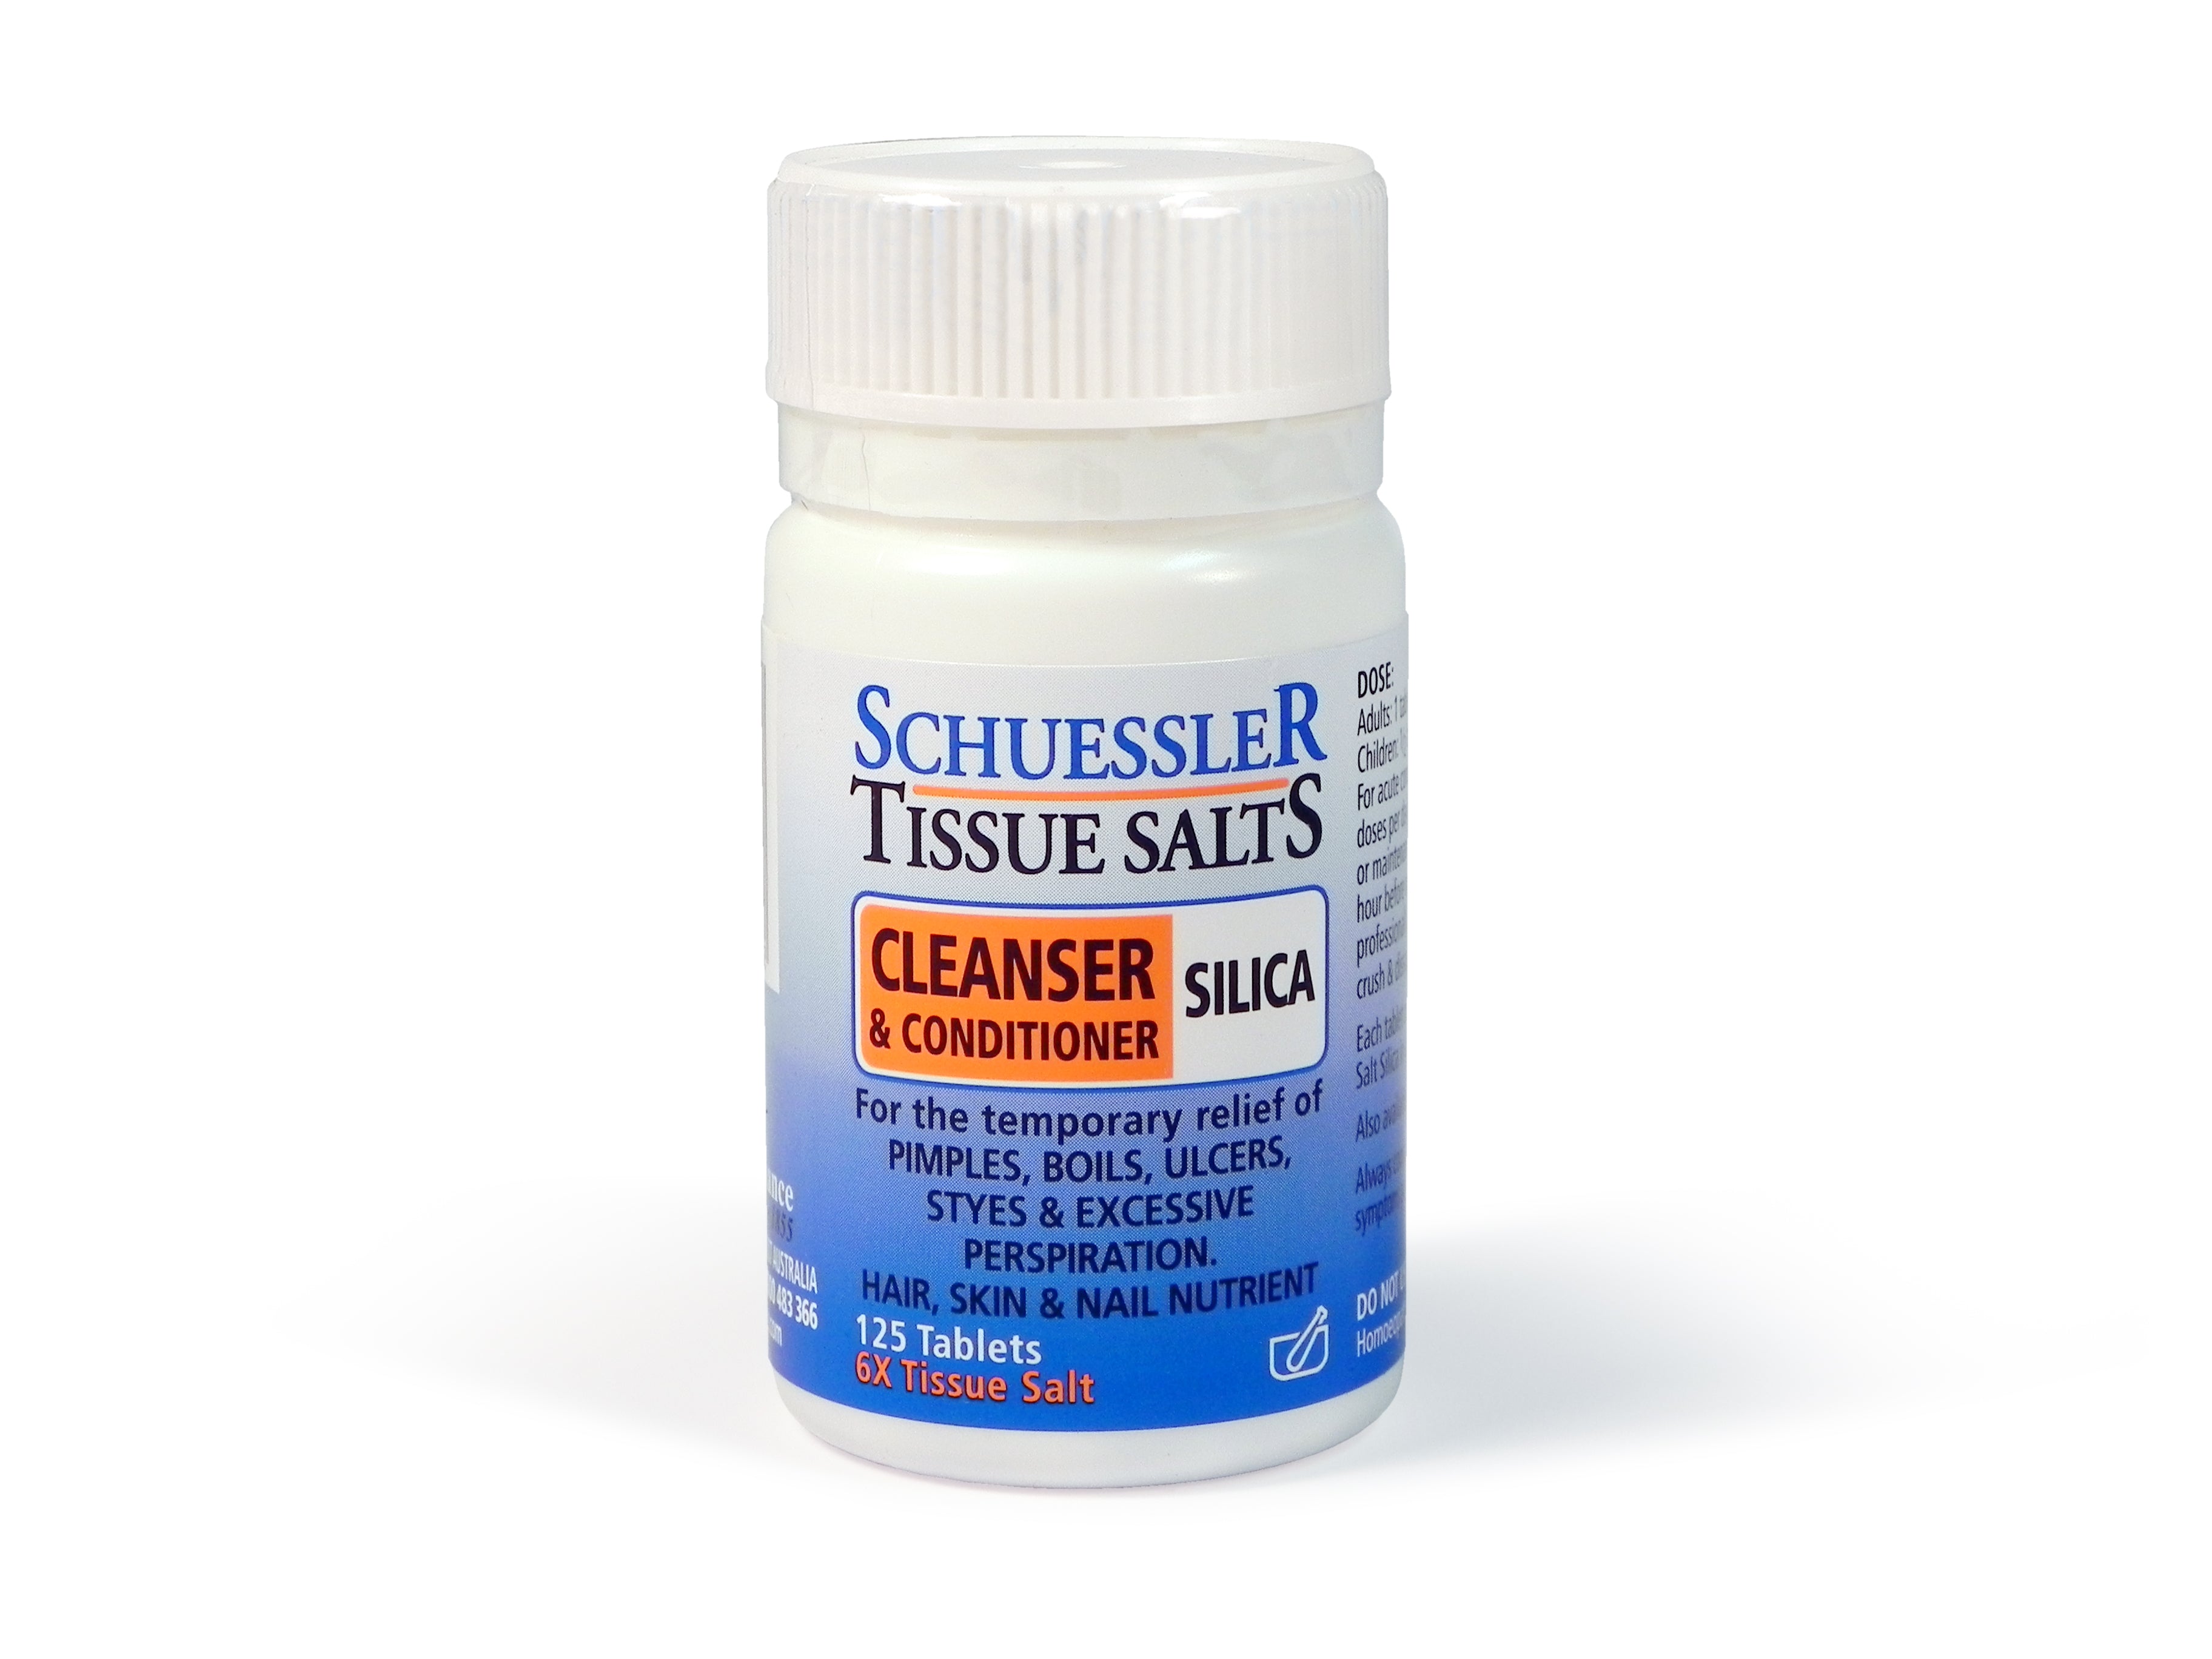 Schuessler Tissue Salts - Silica